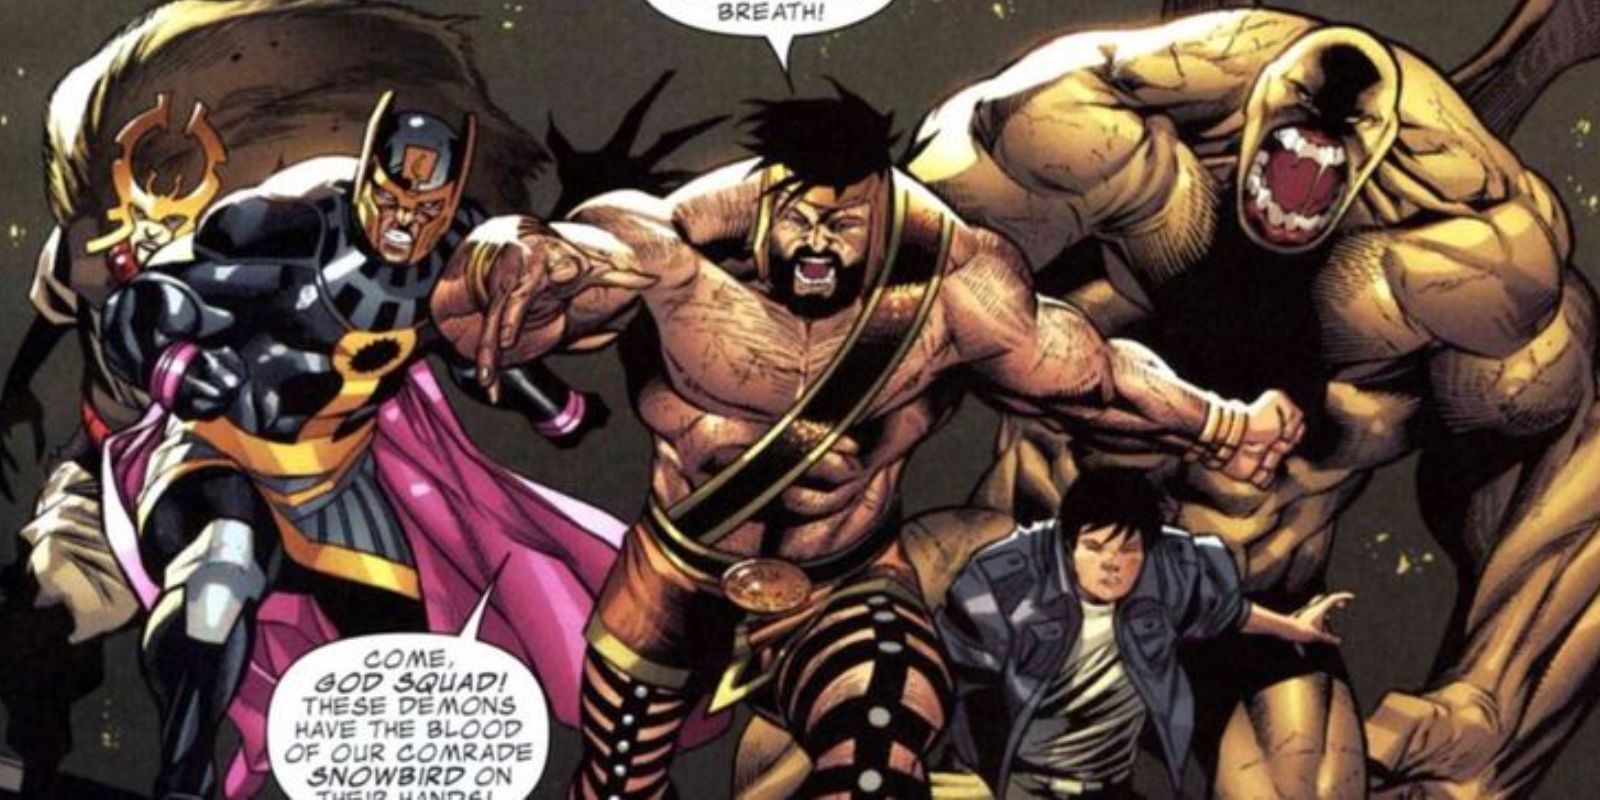 The God Squad in Marvel comics